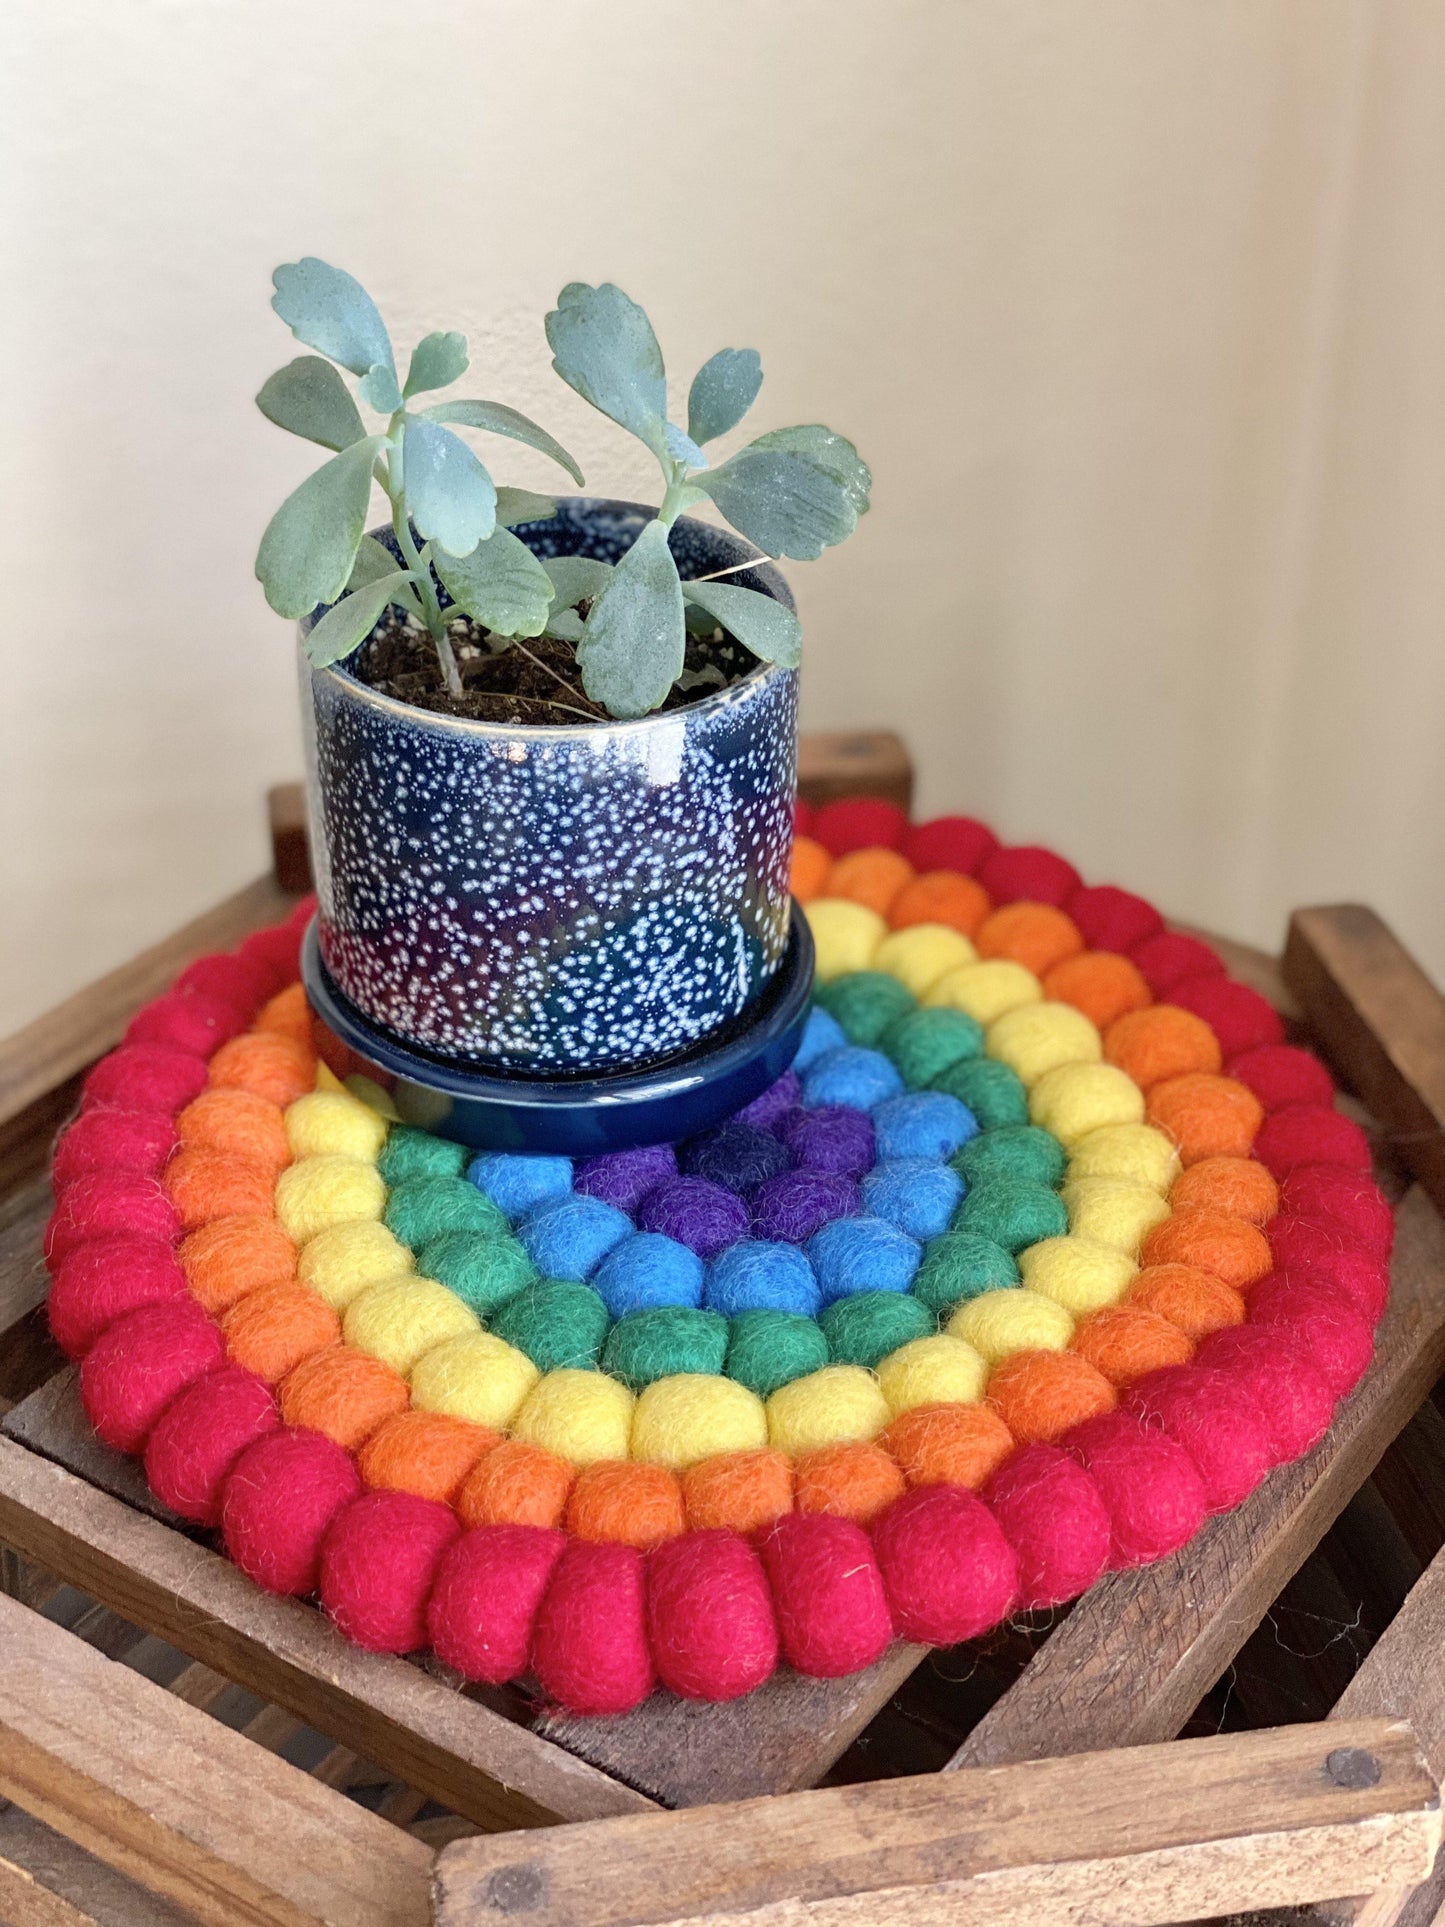 Rainbow Trivet &/or Coaster - Redheadnblue